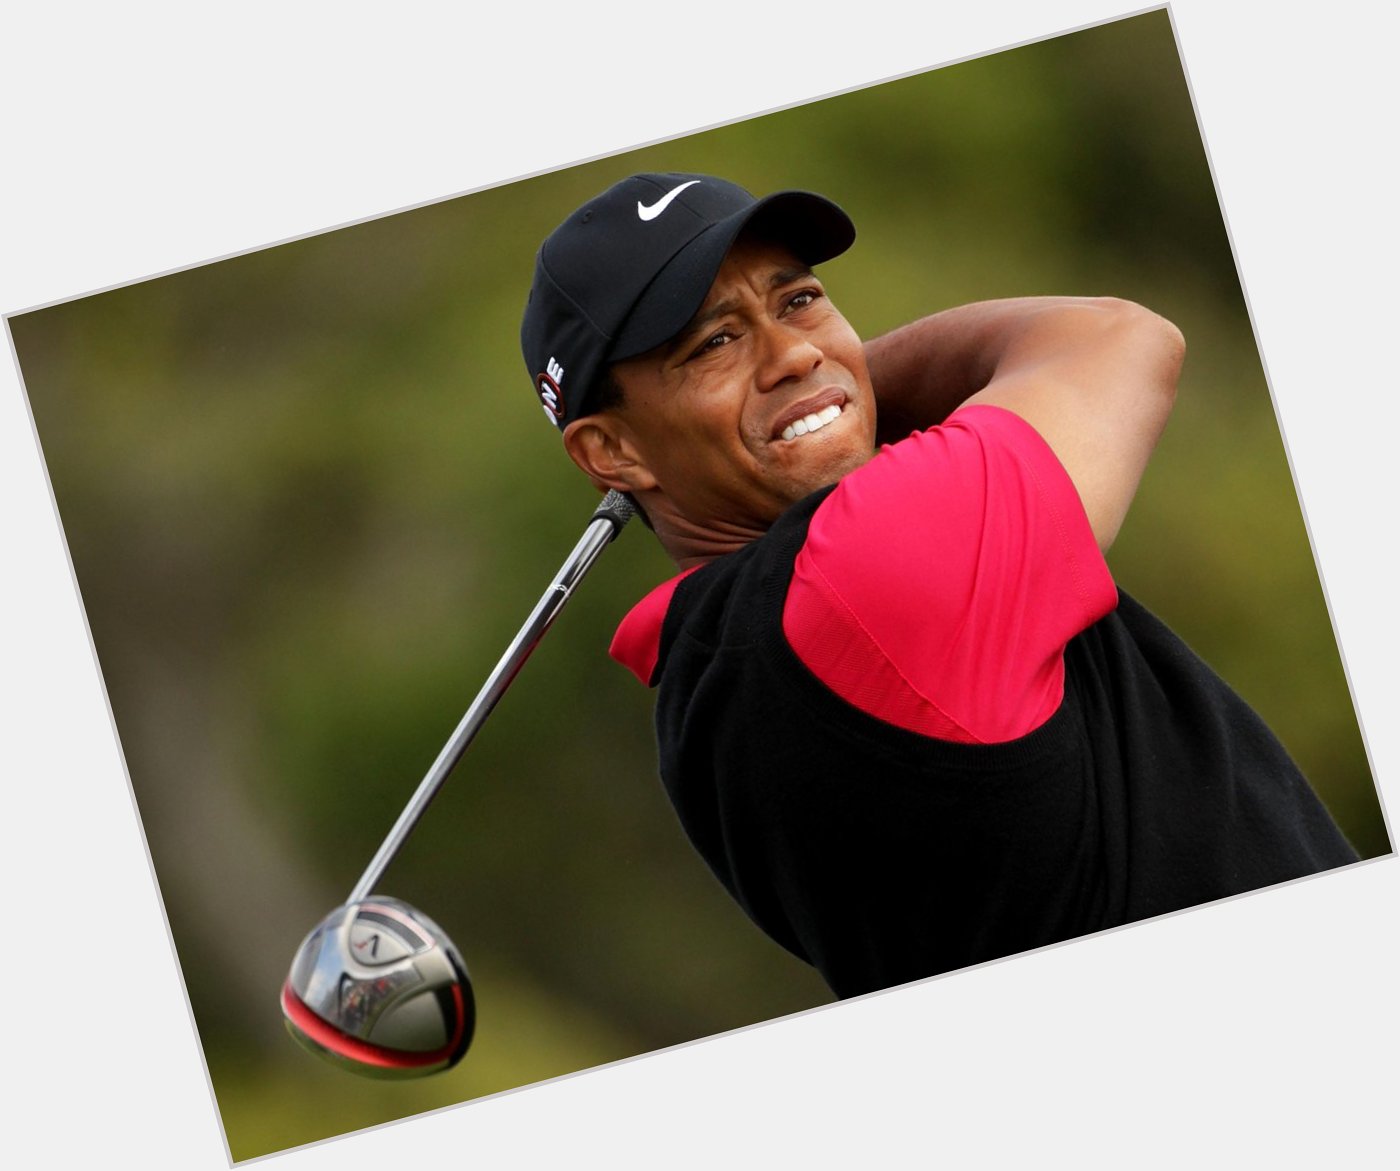 Happy Birthday, Tiger Woods! 